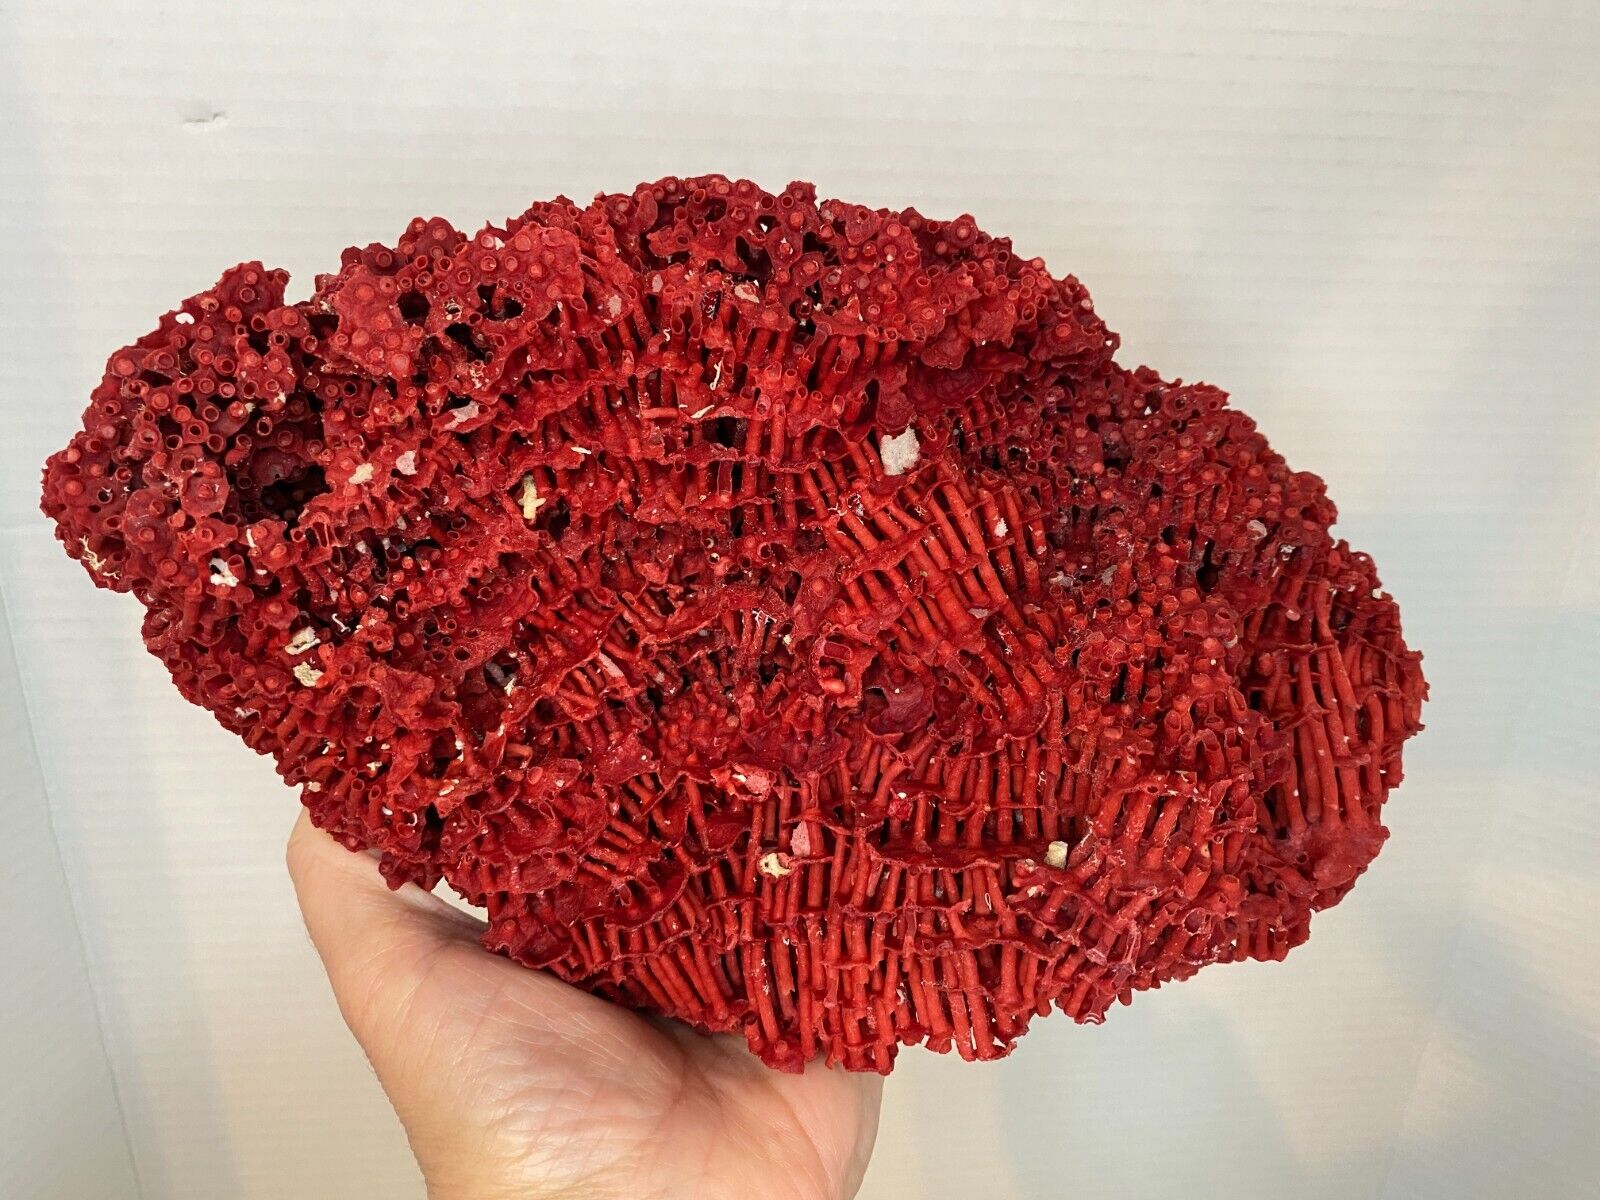 Natural Red Organ Pipe Coral Reef Specimen 9.5 in